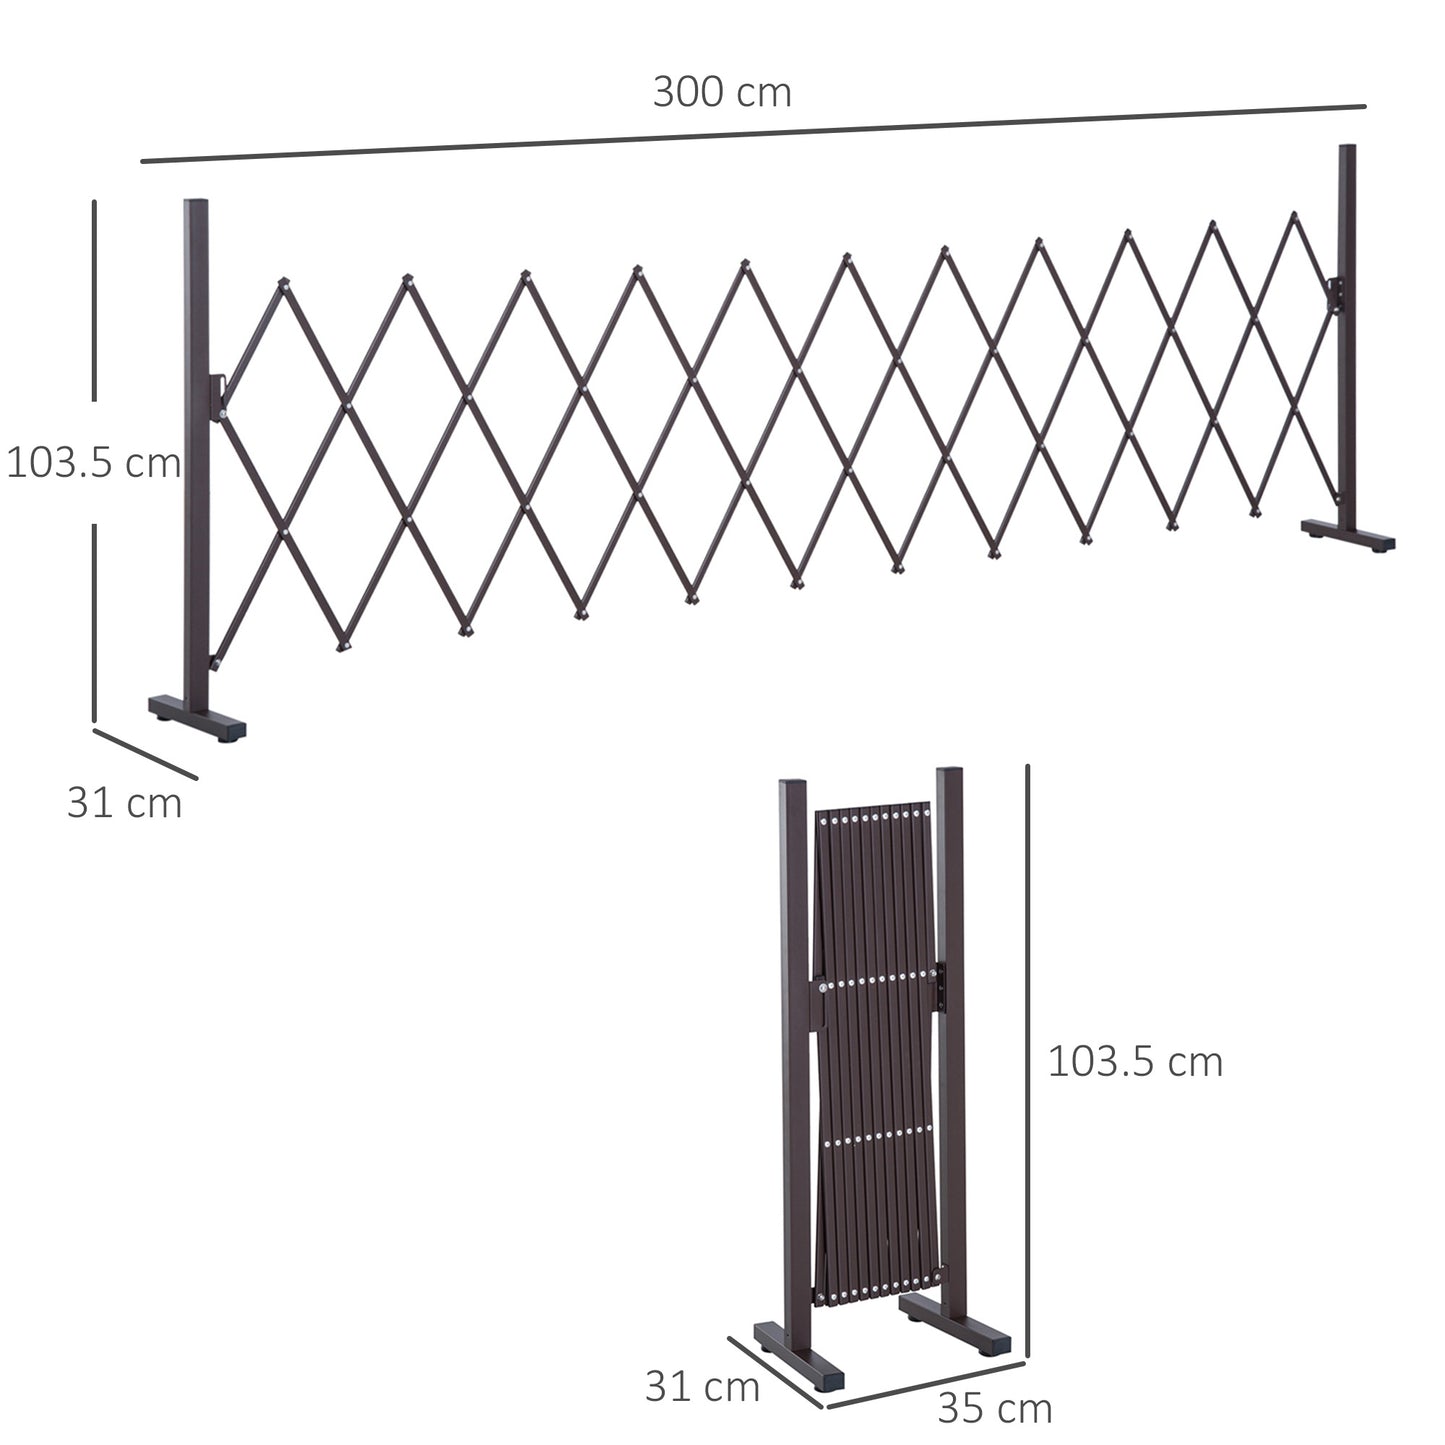 Outsunny Expanding Trellis Fence Freestanding Movable Fence Foldable Garden Screen Panel Aluminum, 300cm x 103.5 cm, Dark Brown